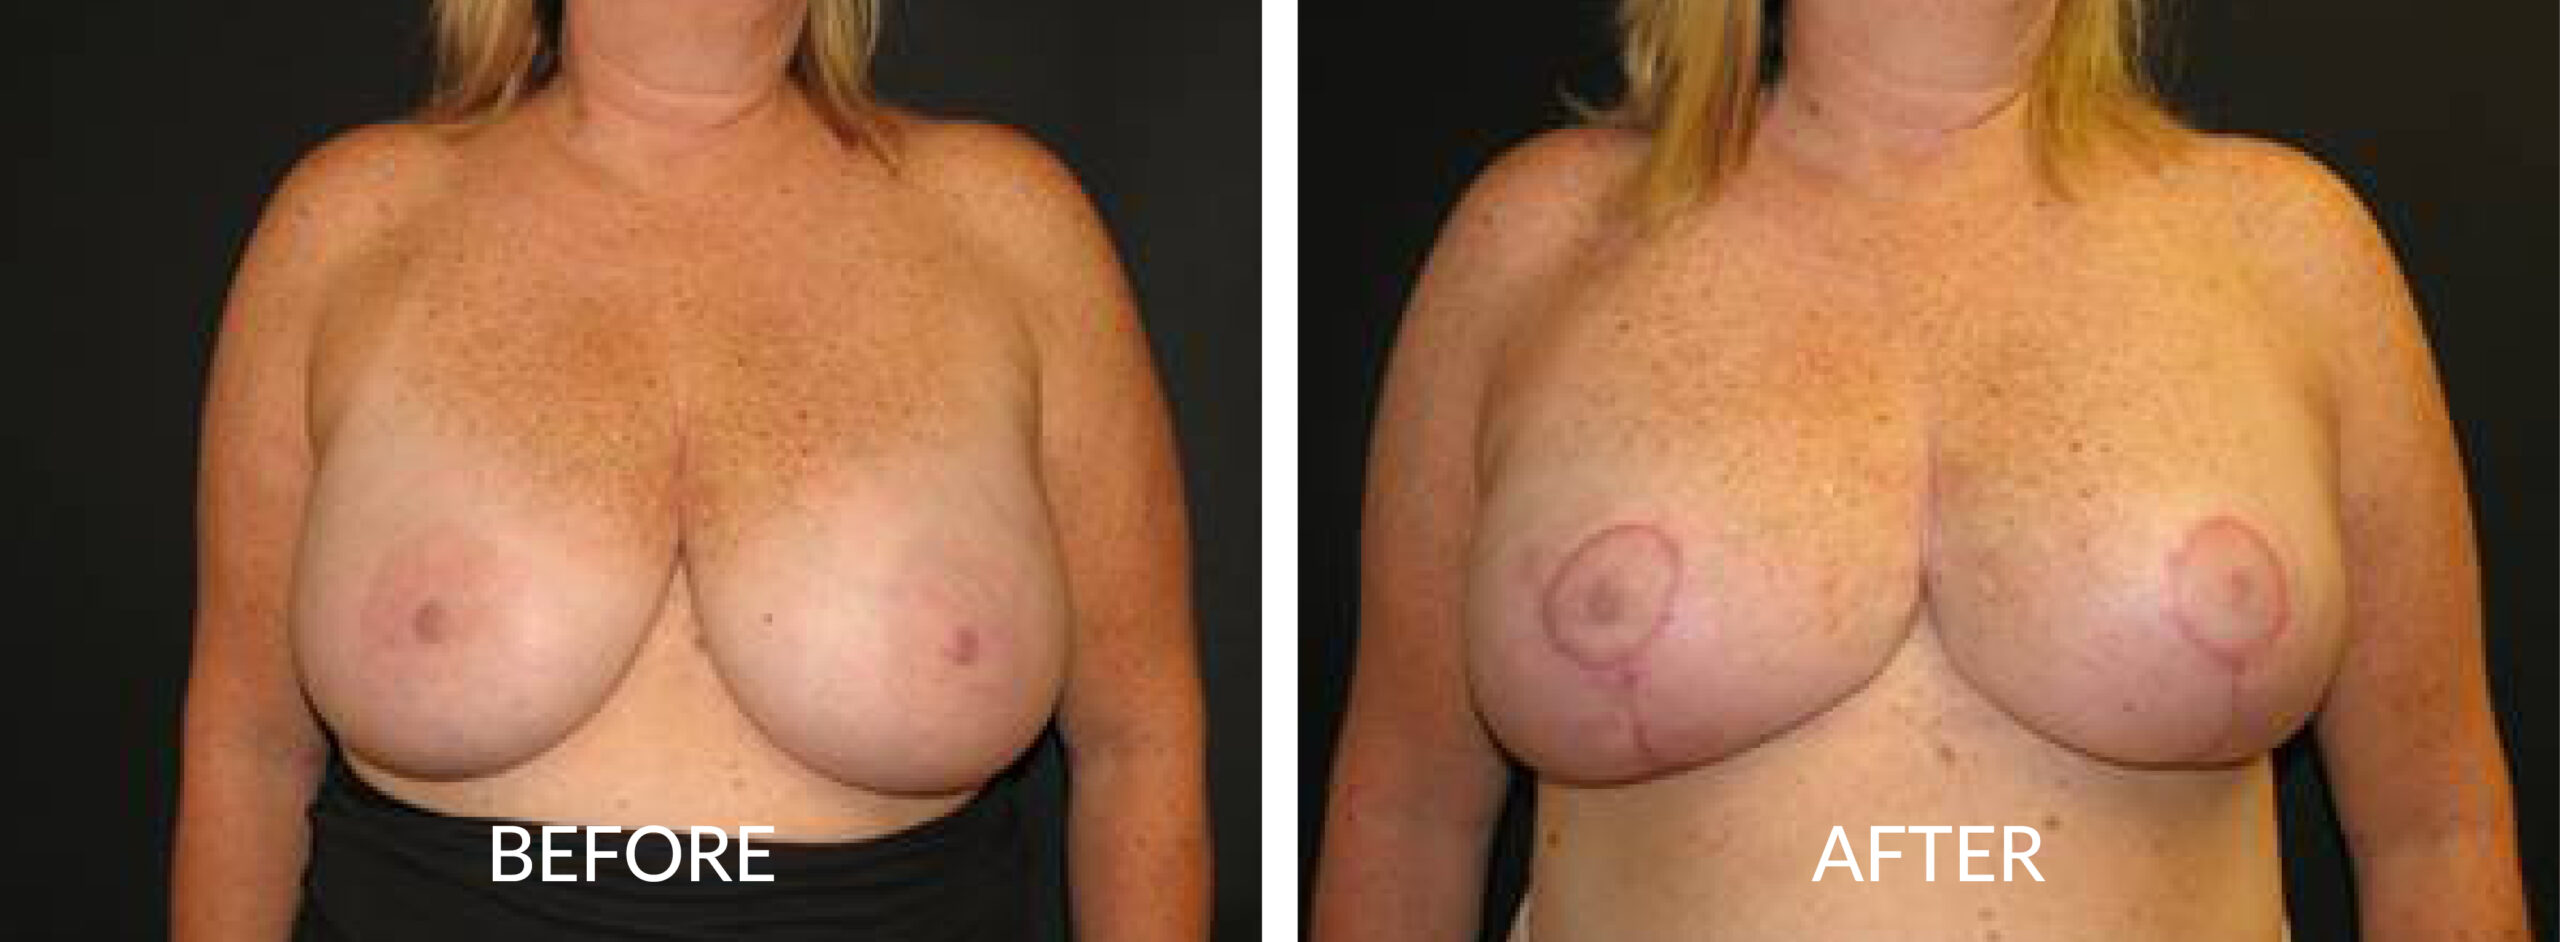 Breast Mastopexy & Reduction